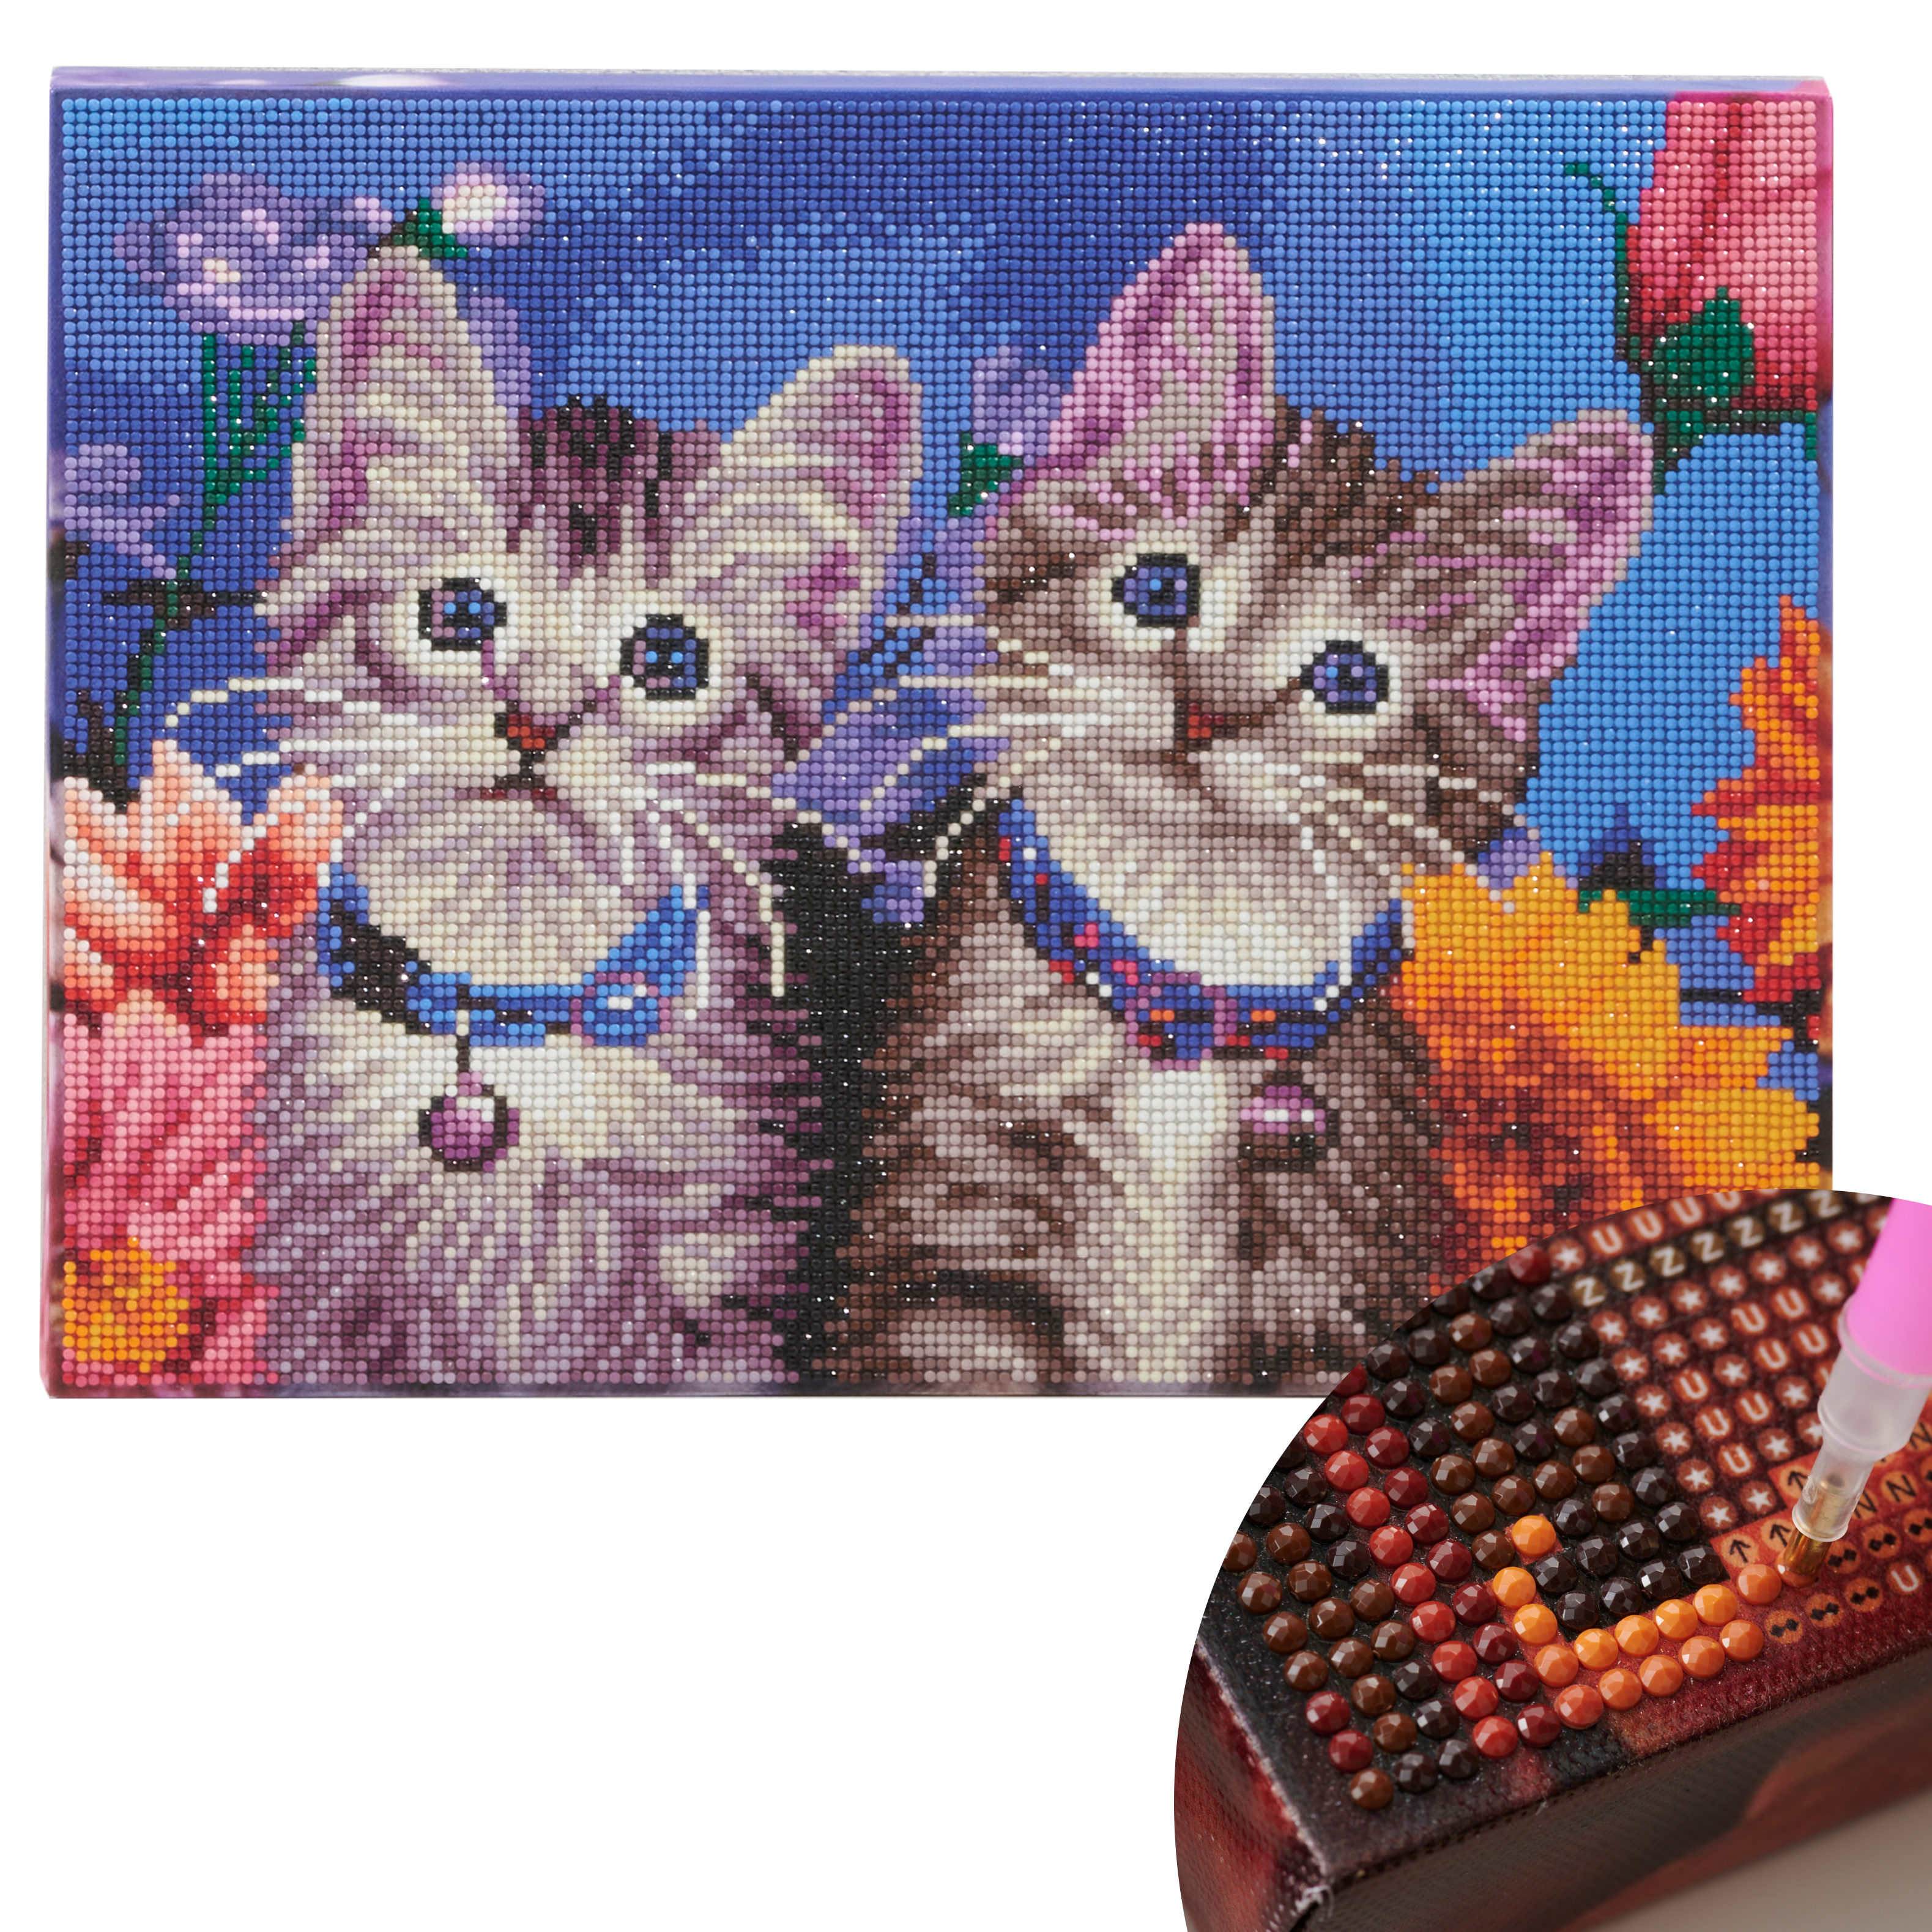 T10-3309 ダイヤモンドフィックス 子猫たち ビーズキット (袋)